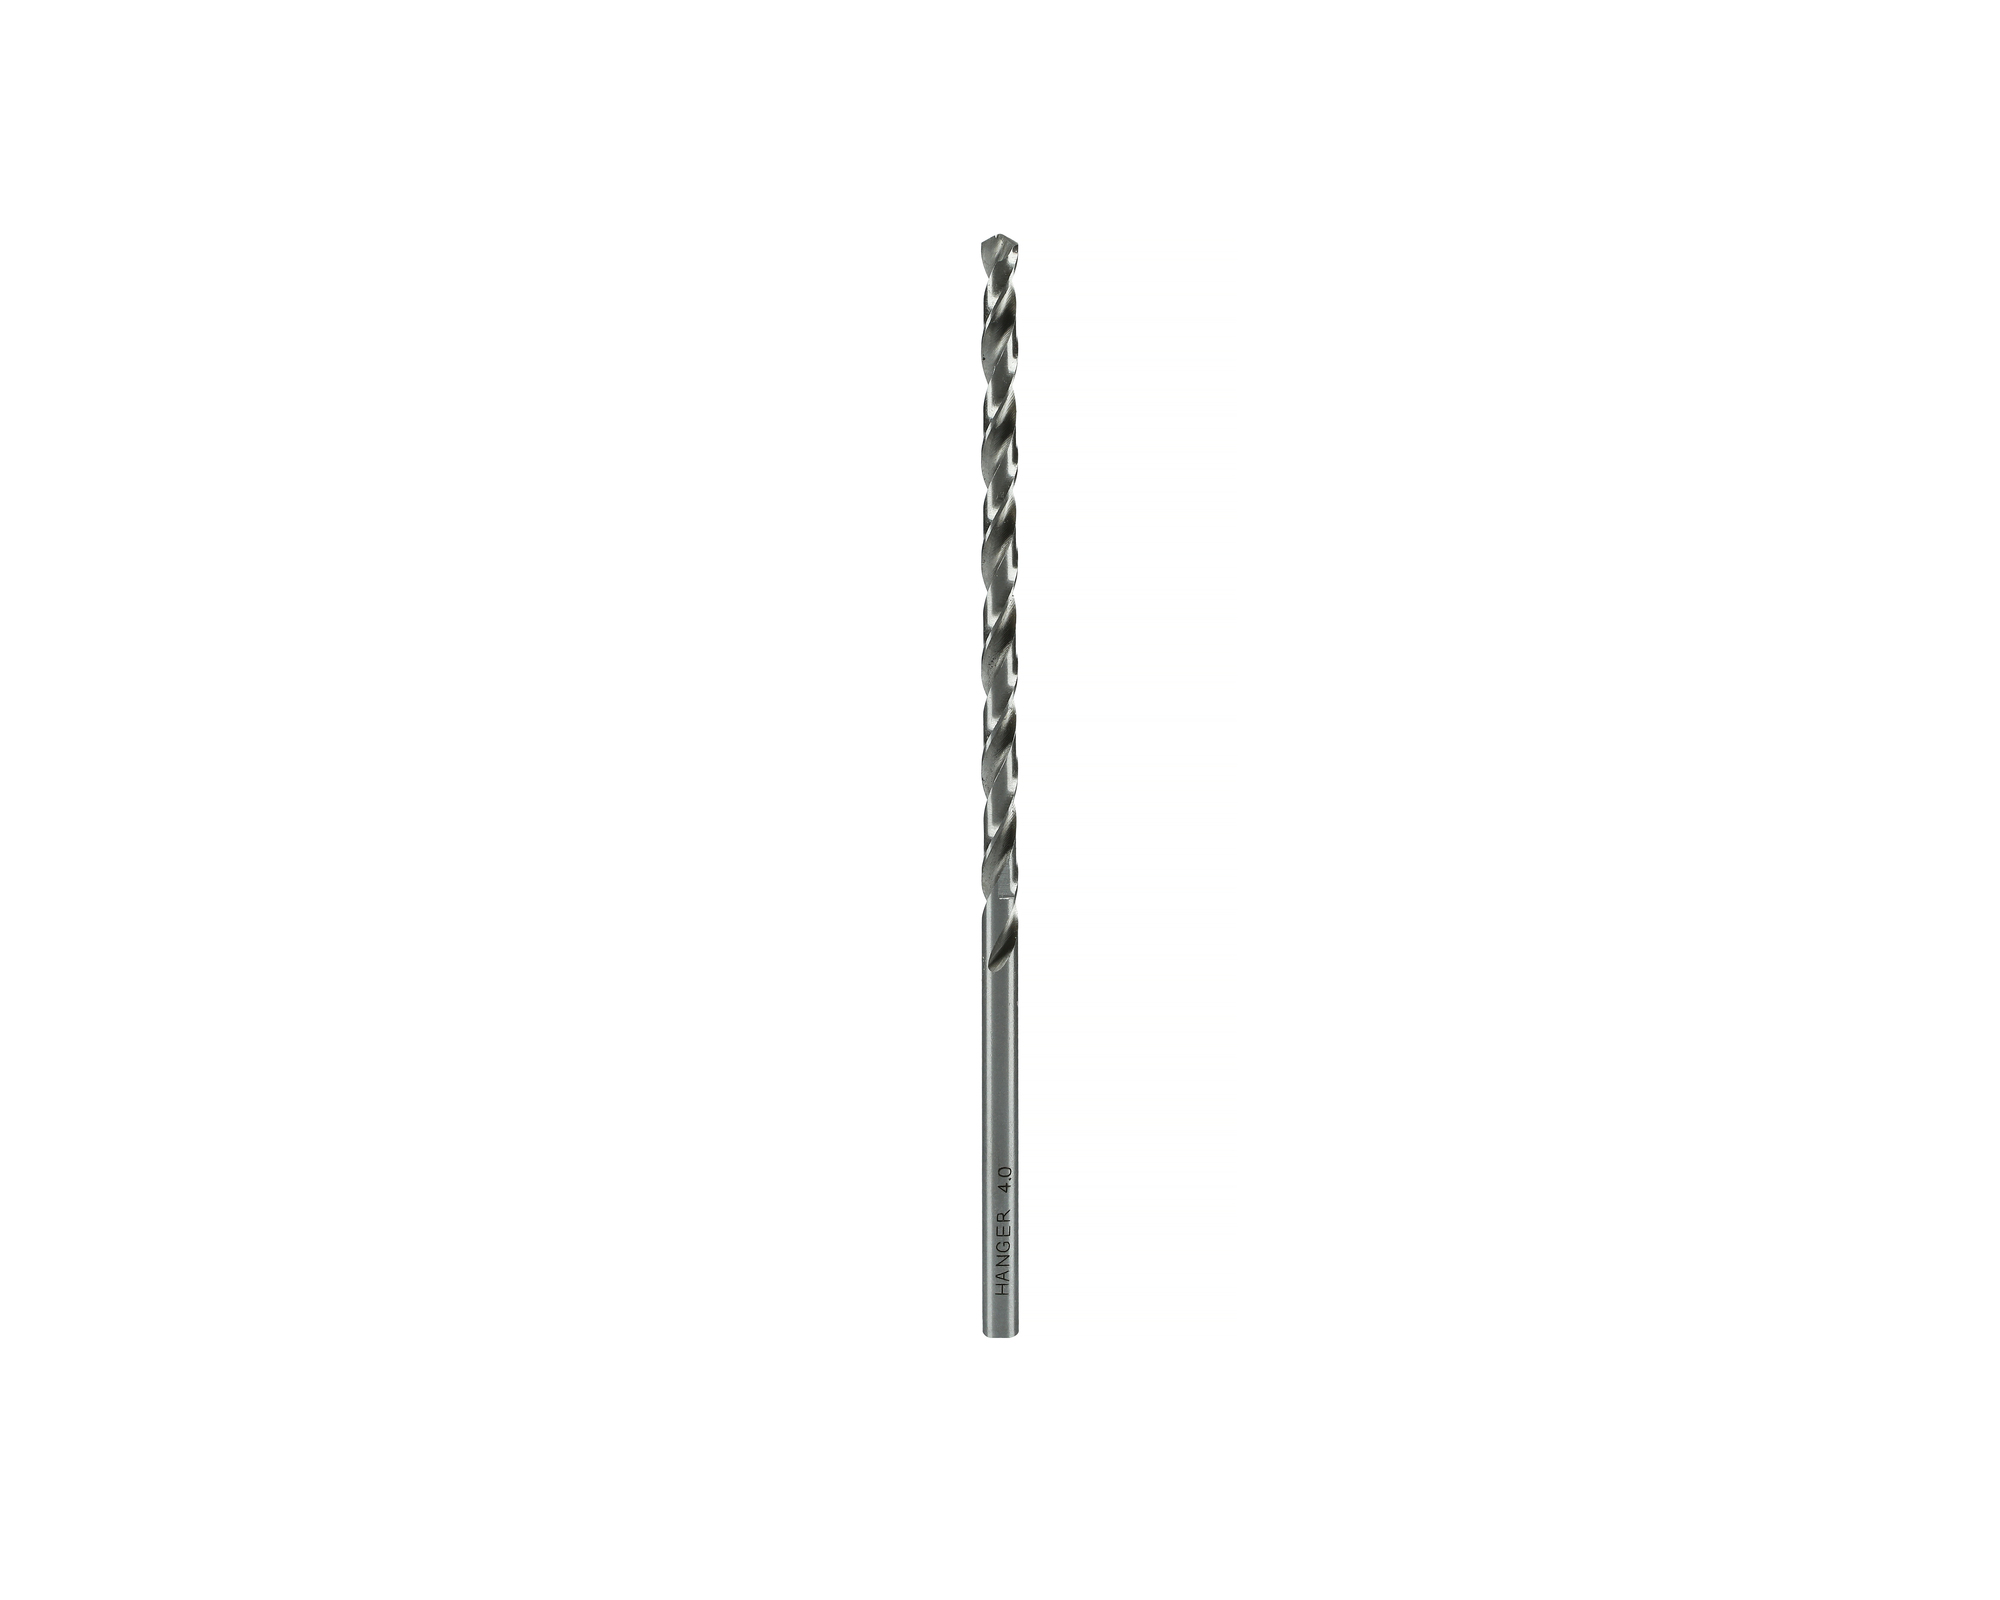 Foret métal long HSS2 D 6mm longueur 139mm - HANGER - 155560